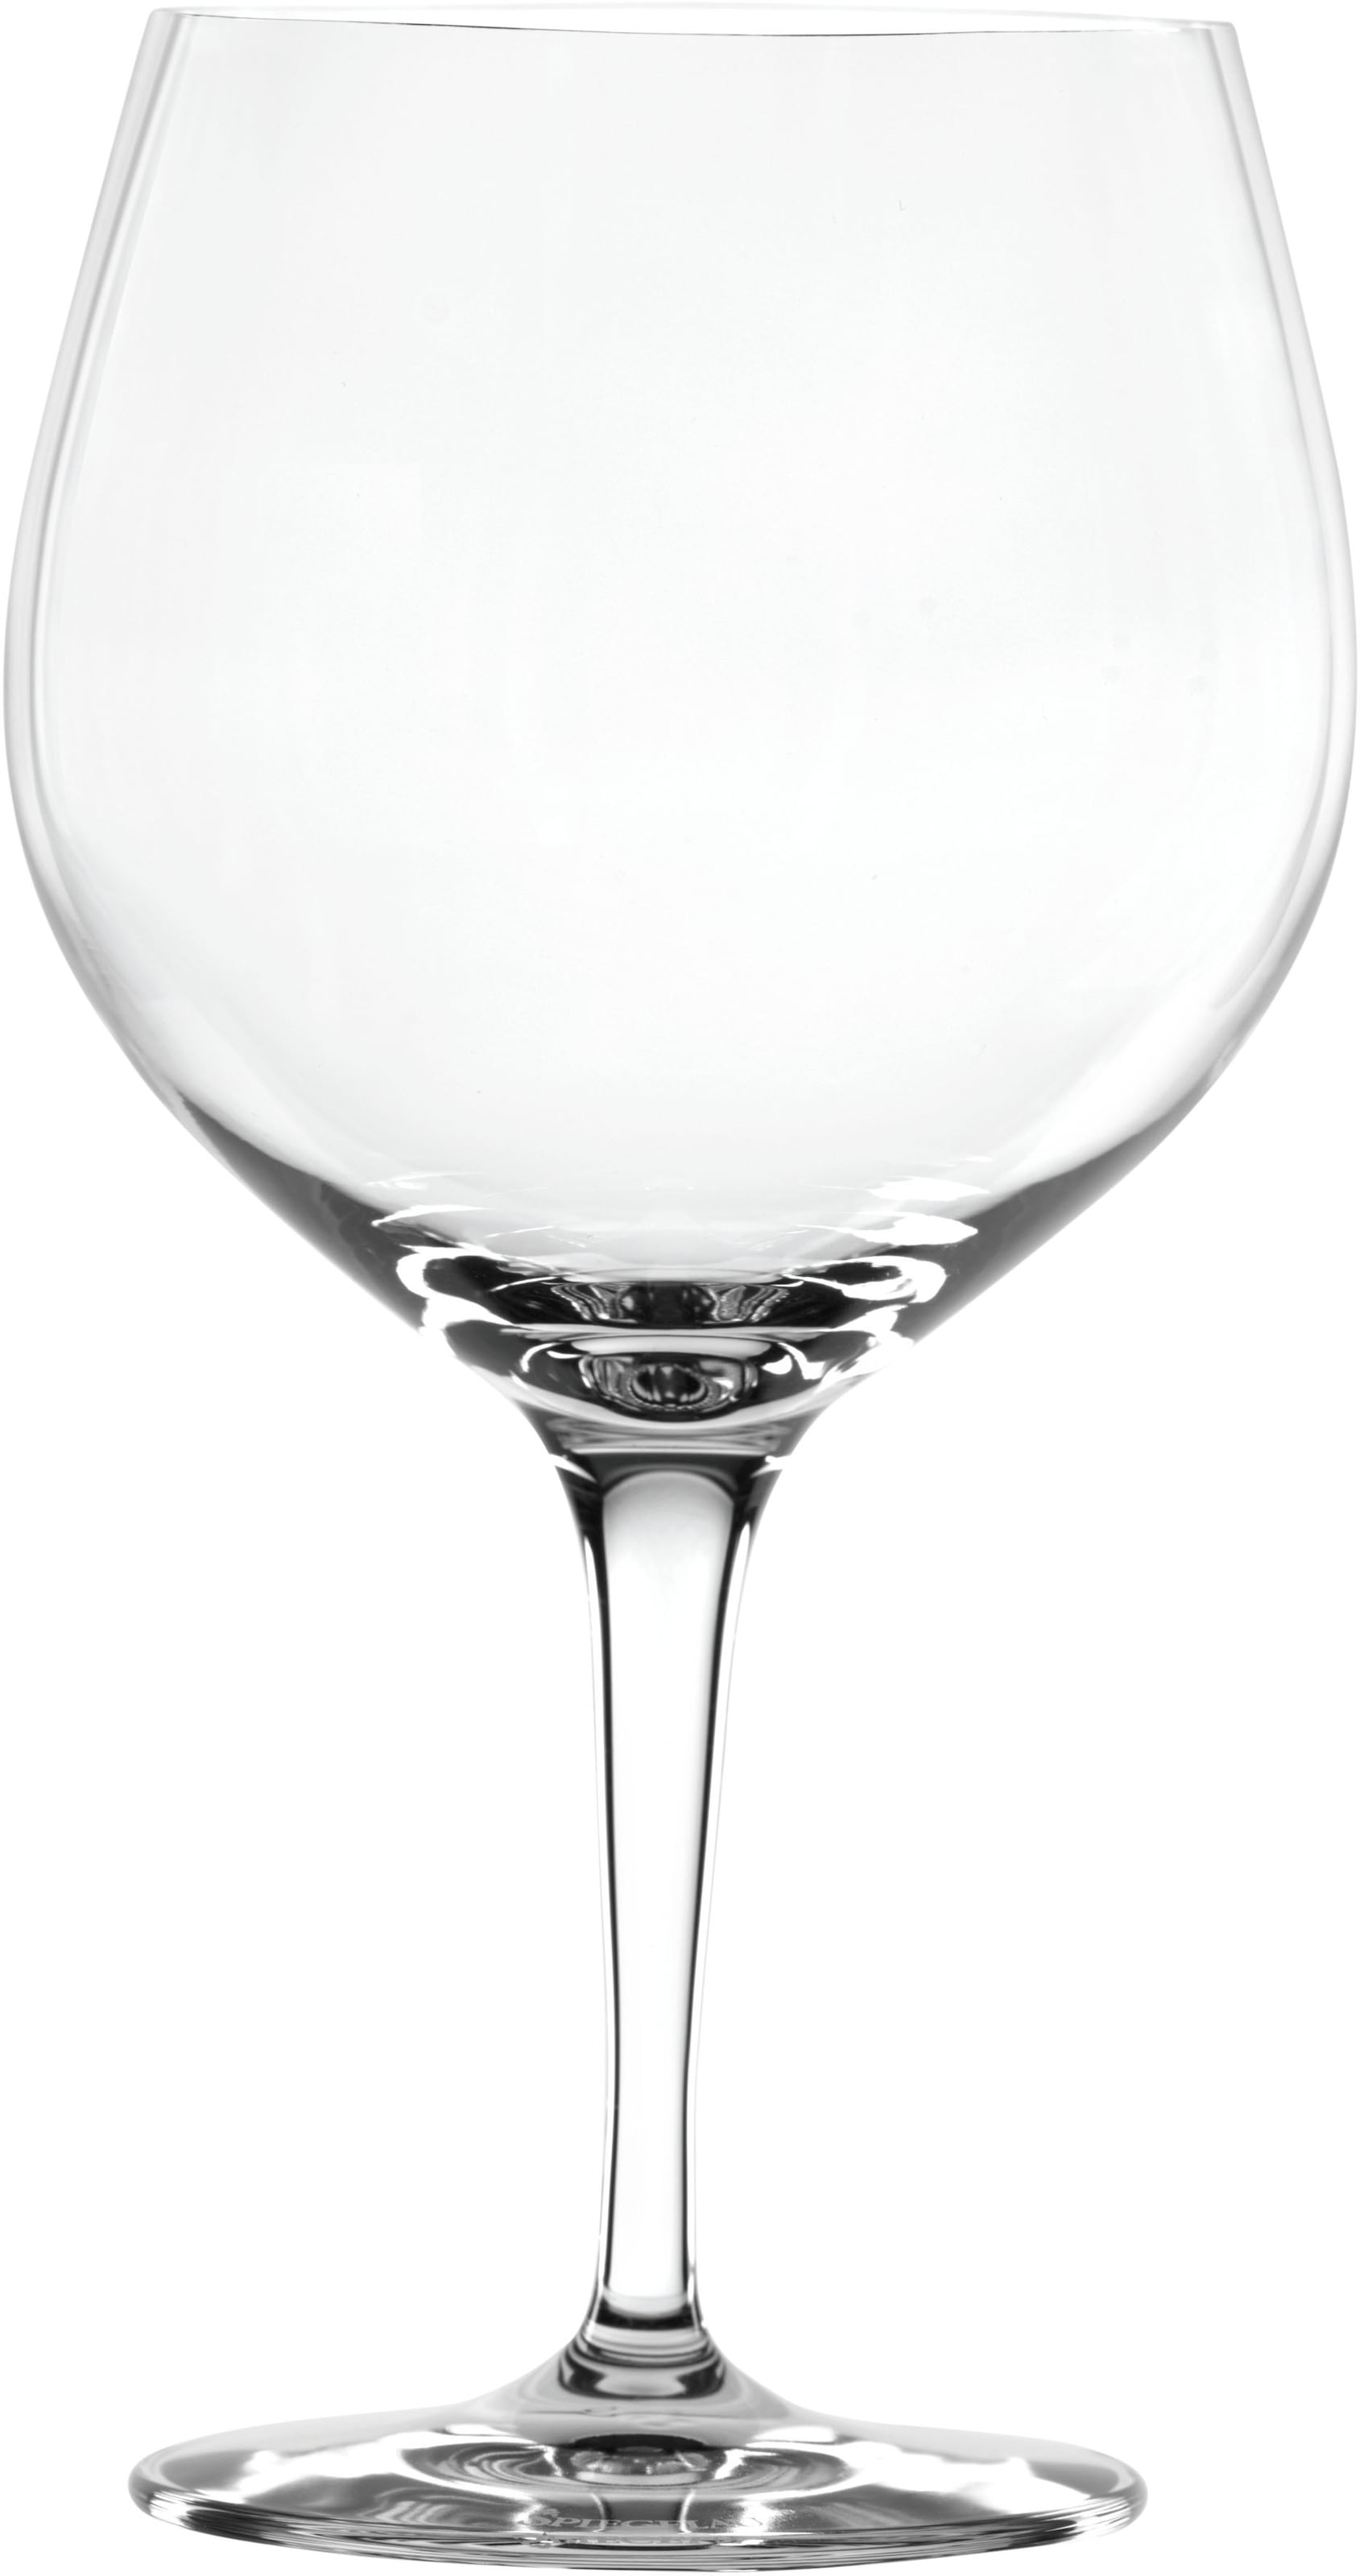 SPIEGELAU Cocktailglas »Special Glasses«, (Set, 4 tlg., Set bestehend aus 4 Gläsern), 630 ml, 4-teilig